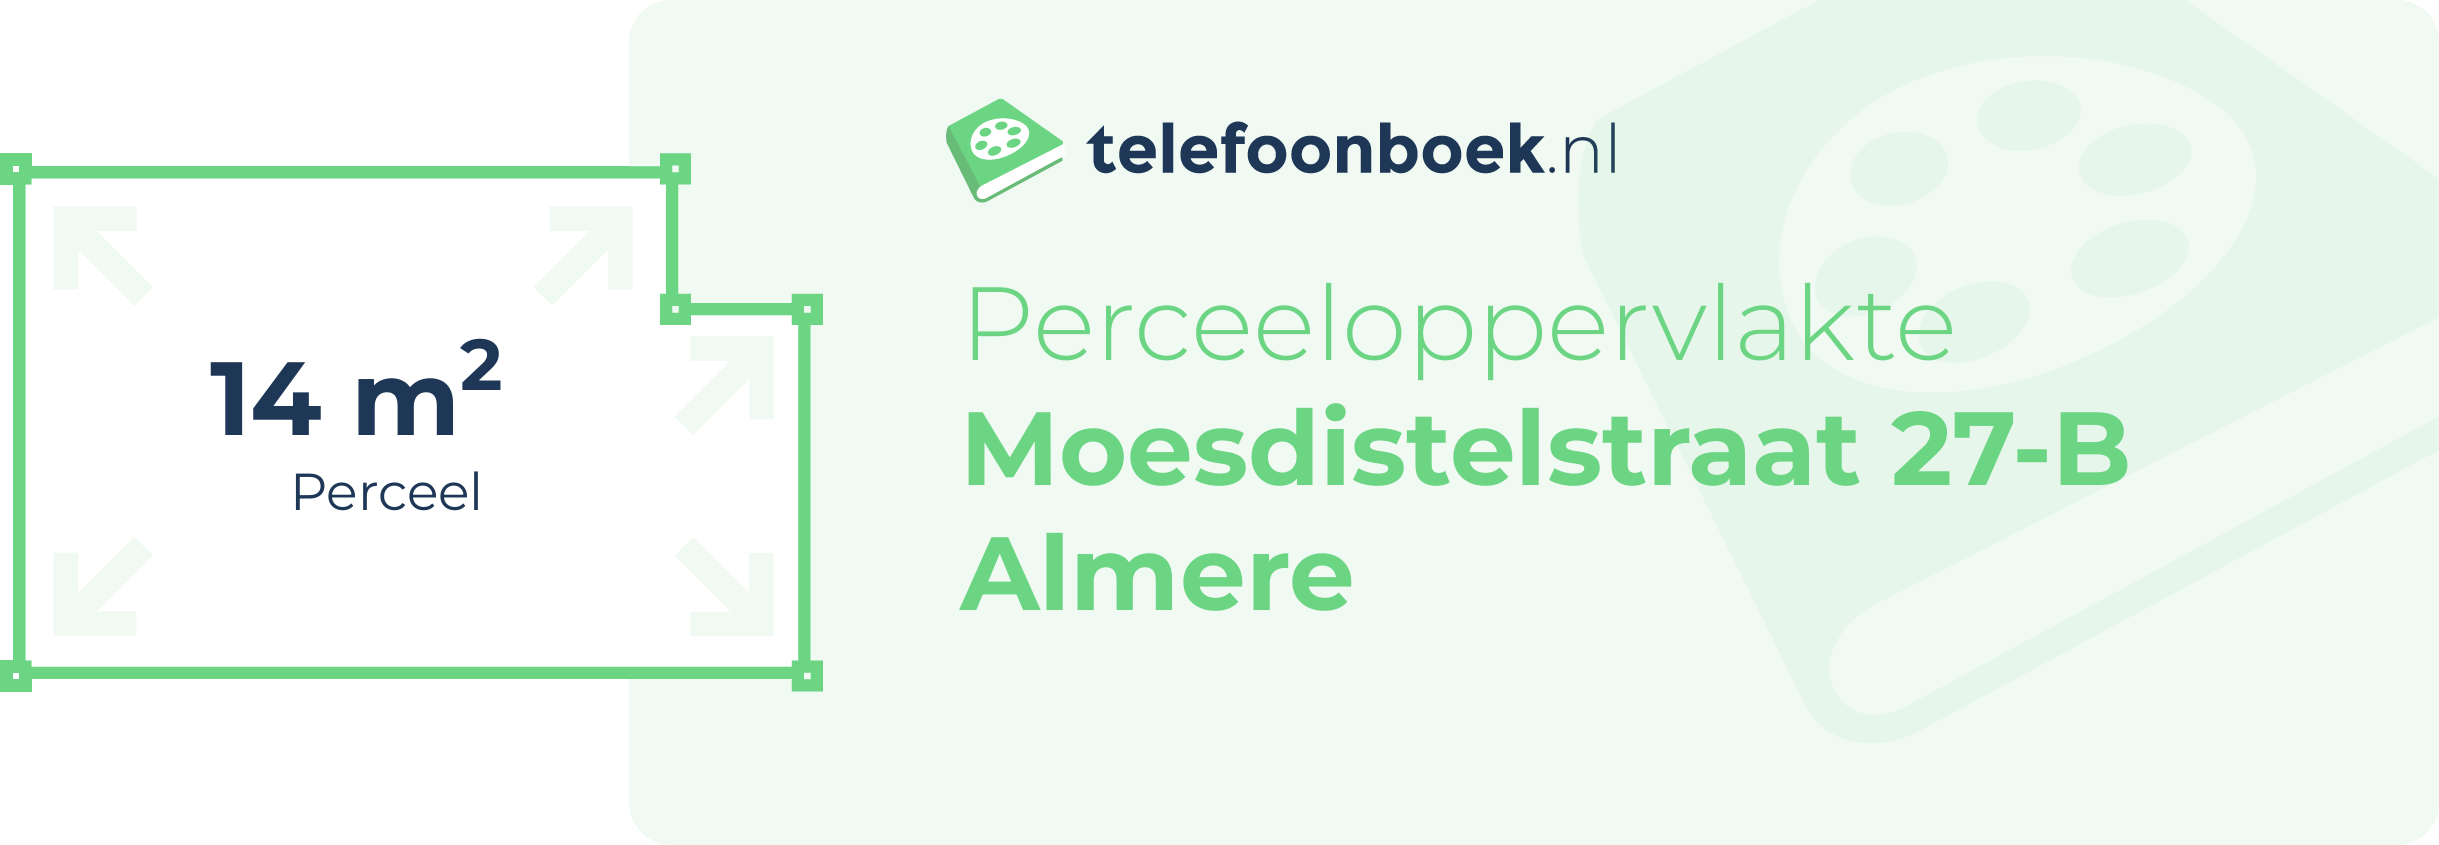 Perceeloppervlakte Moesdistelstraat 27-B Almere